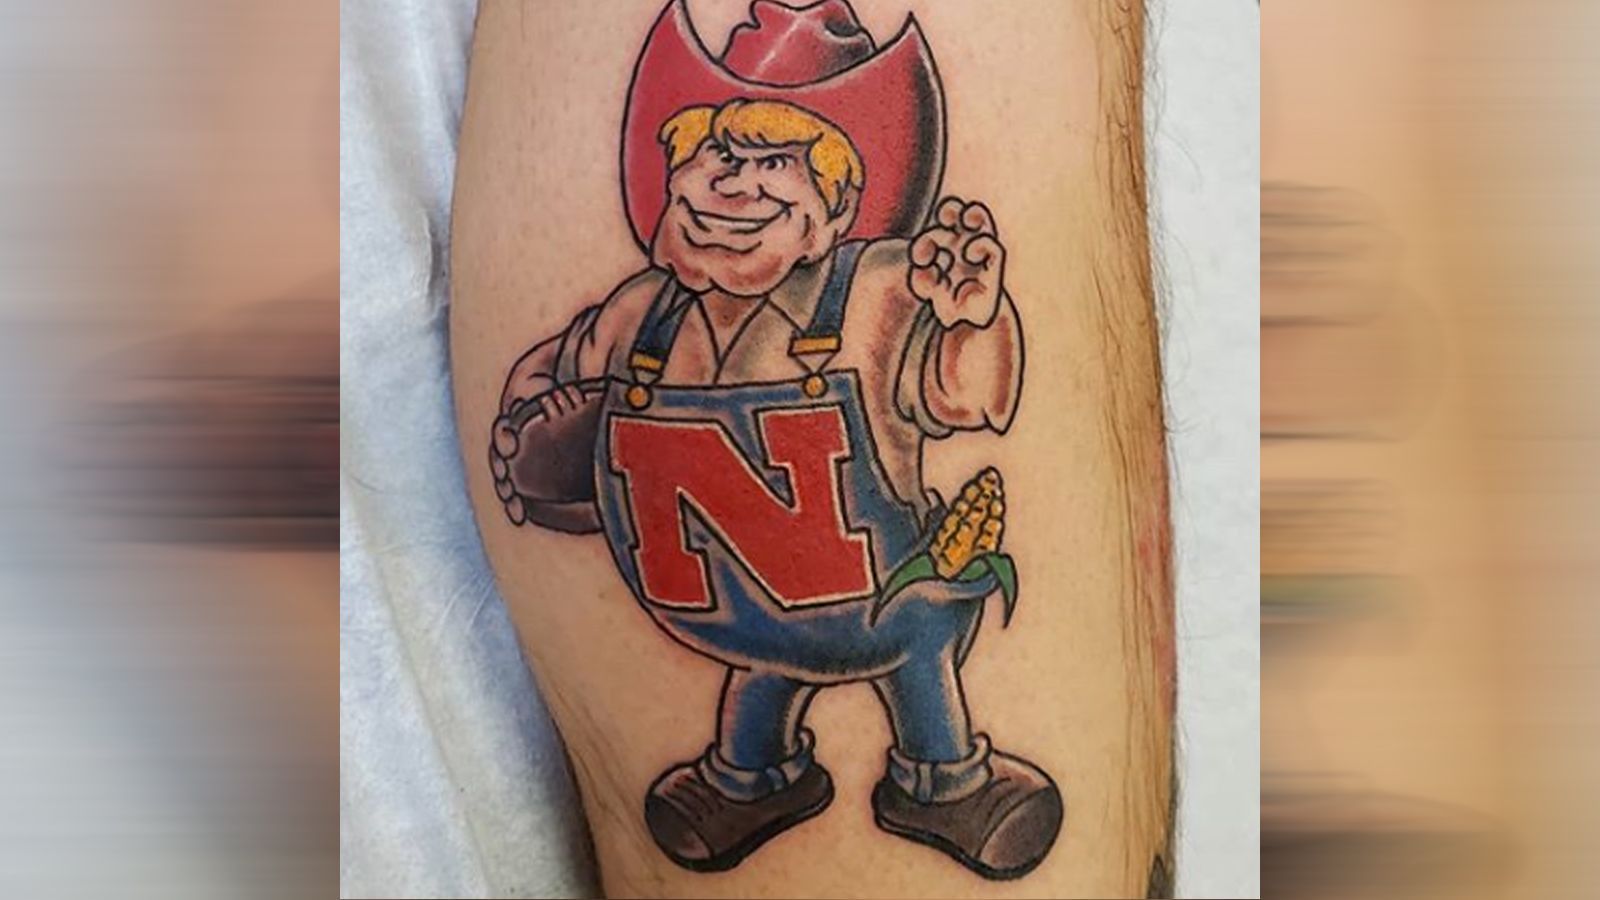 
                <strong>Nebraska Cornhuskers</strong><br>
                "Herbie Husker on a cool dude!" - Auch der Fotografin gefällt das Maskottchen der Nebraska Cornhuskers auf der Haut.
              